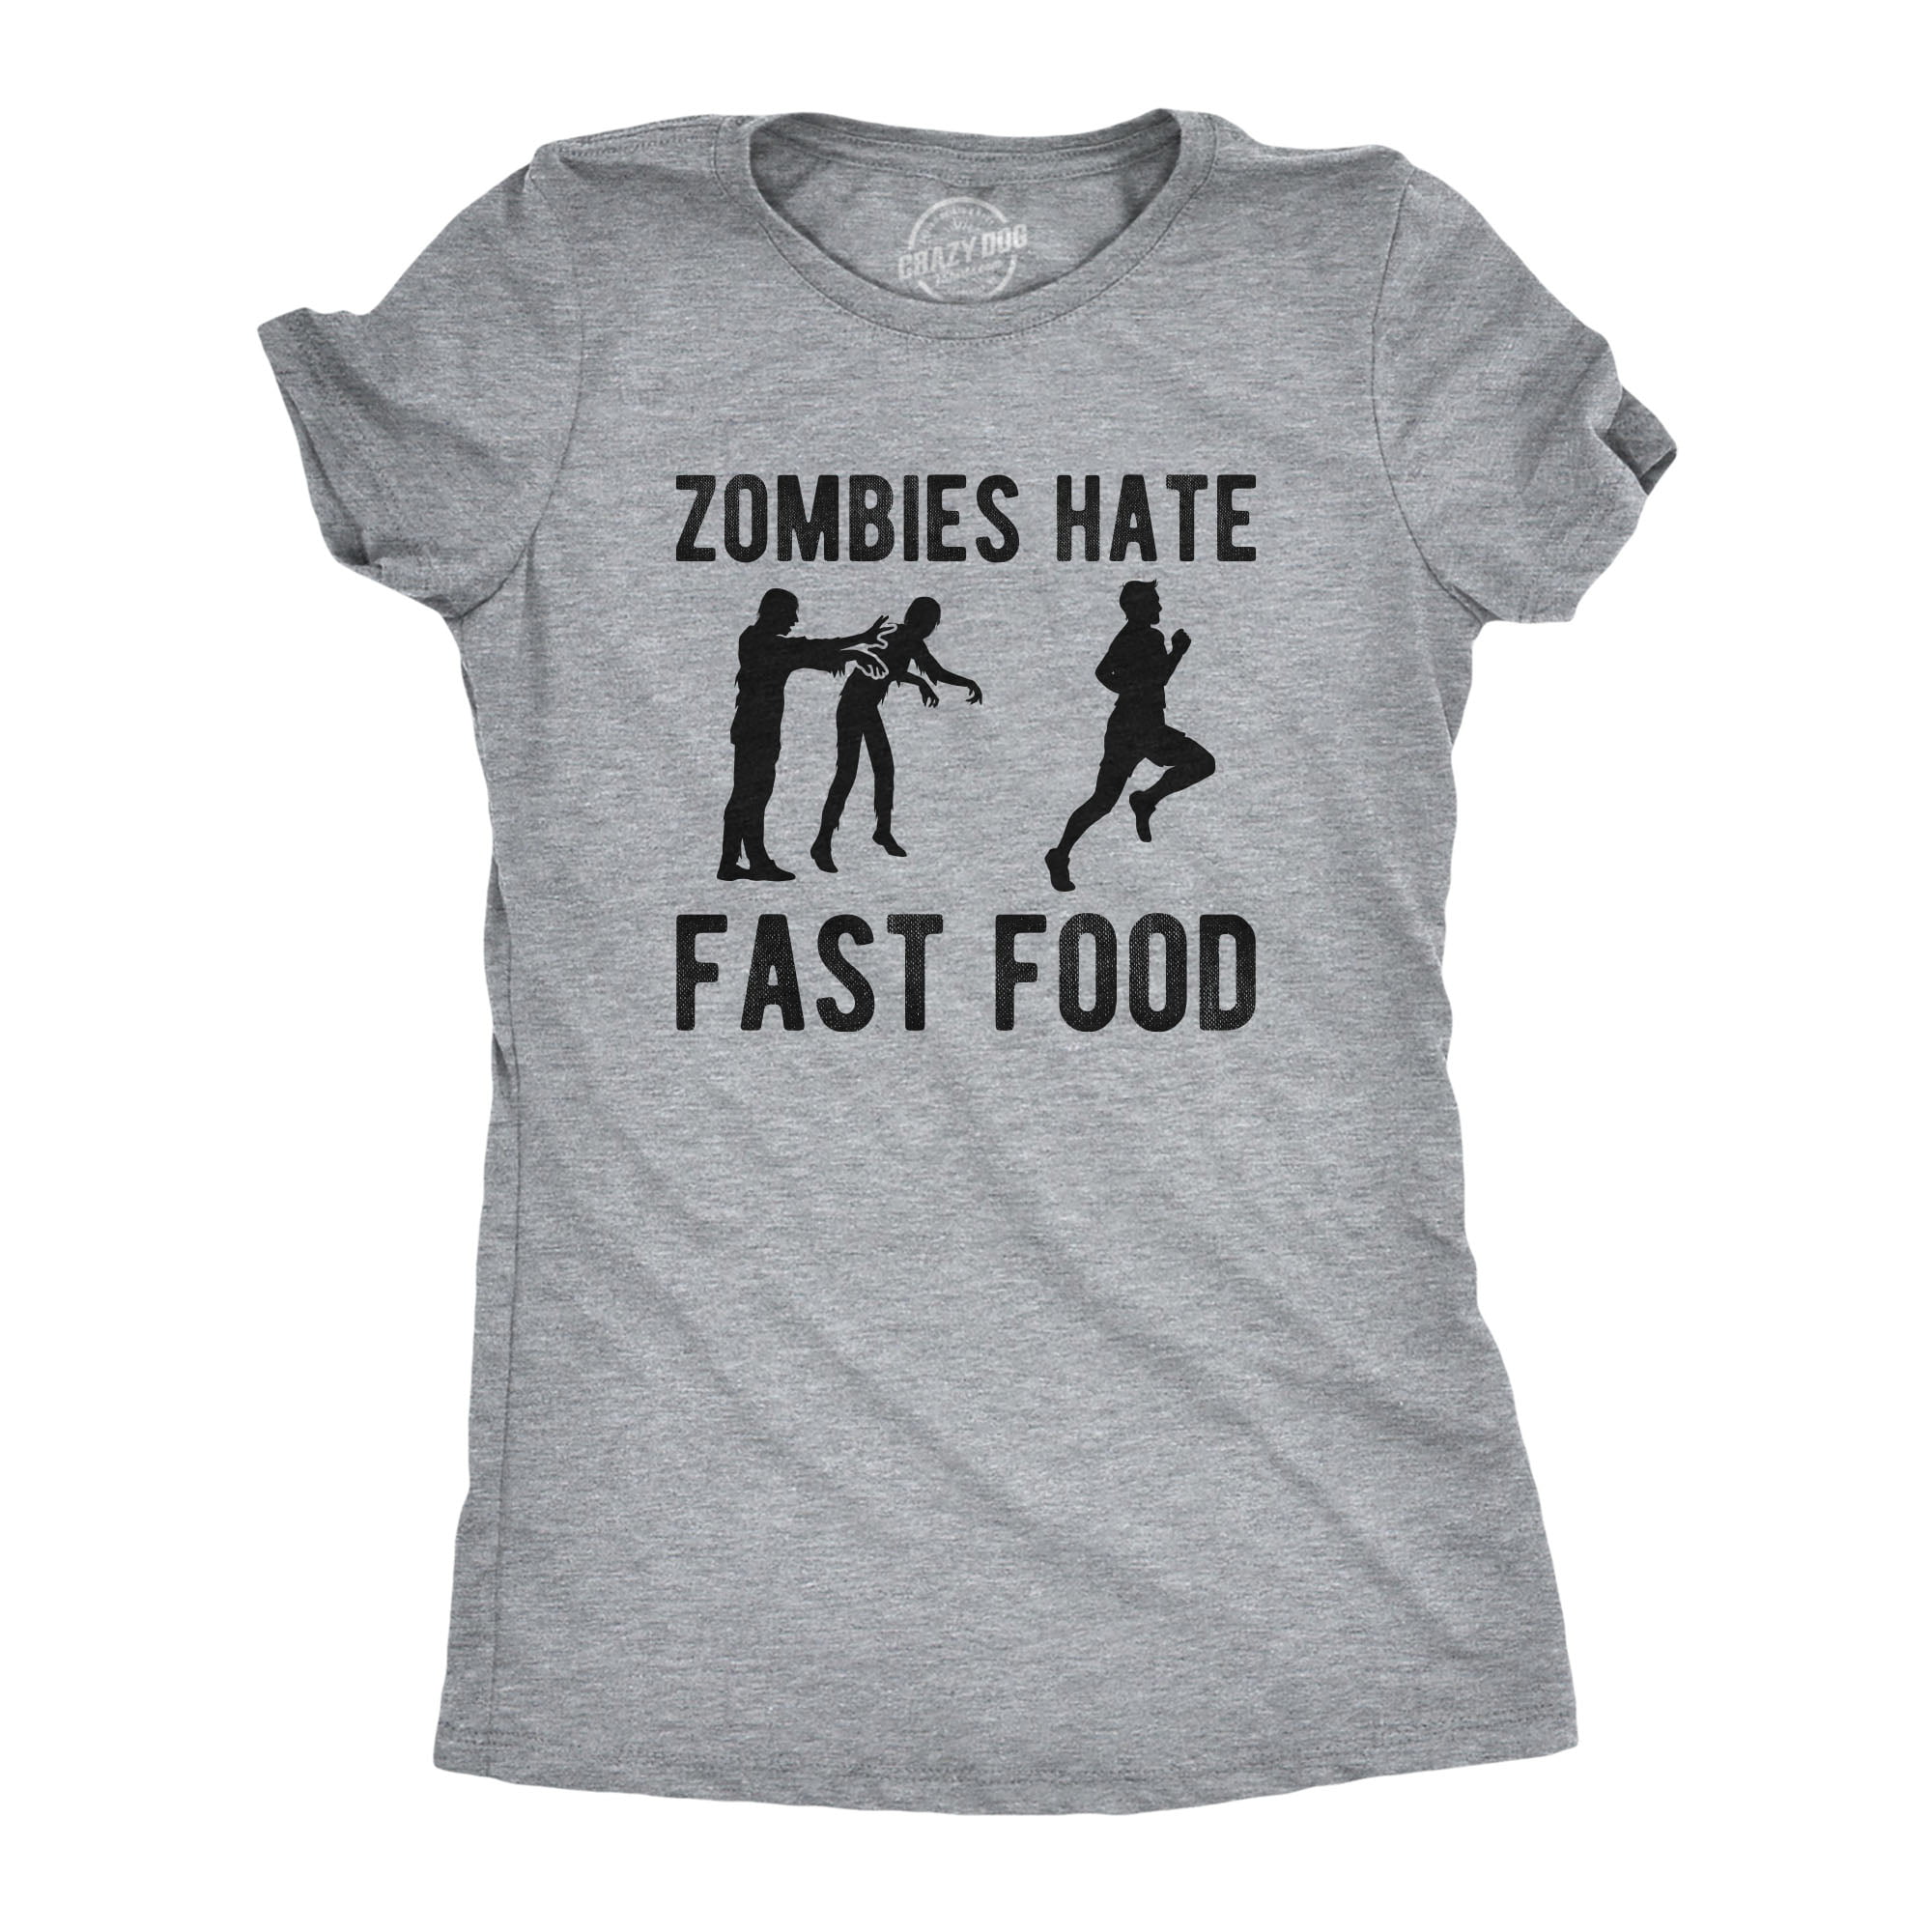 Single Girl Tshirt Foodie Girl Tshirt In A Serious Relation-chip Funny Nacho Shirt Funny Single Lady Shirt